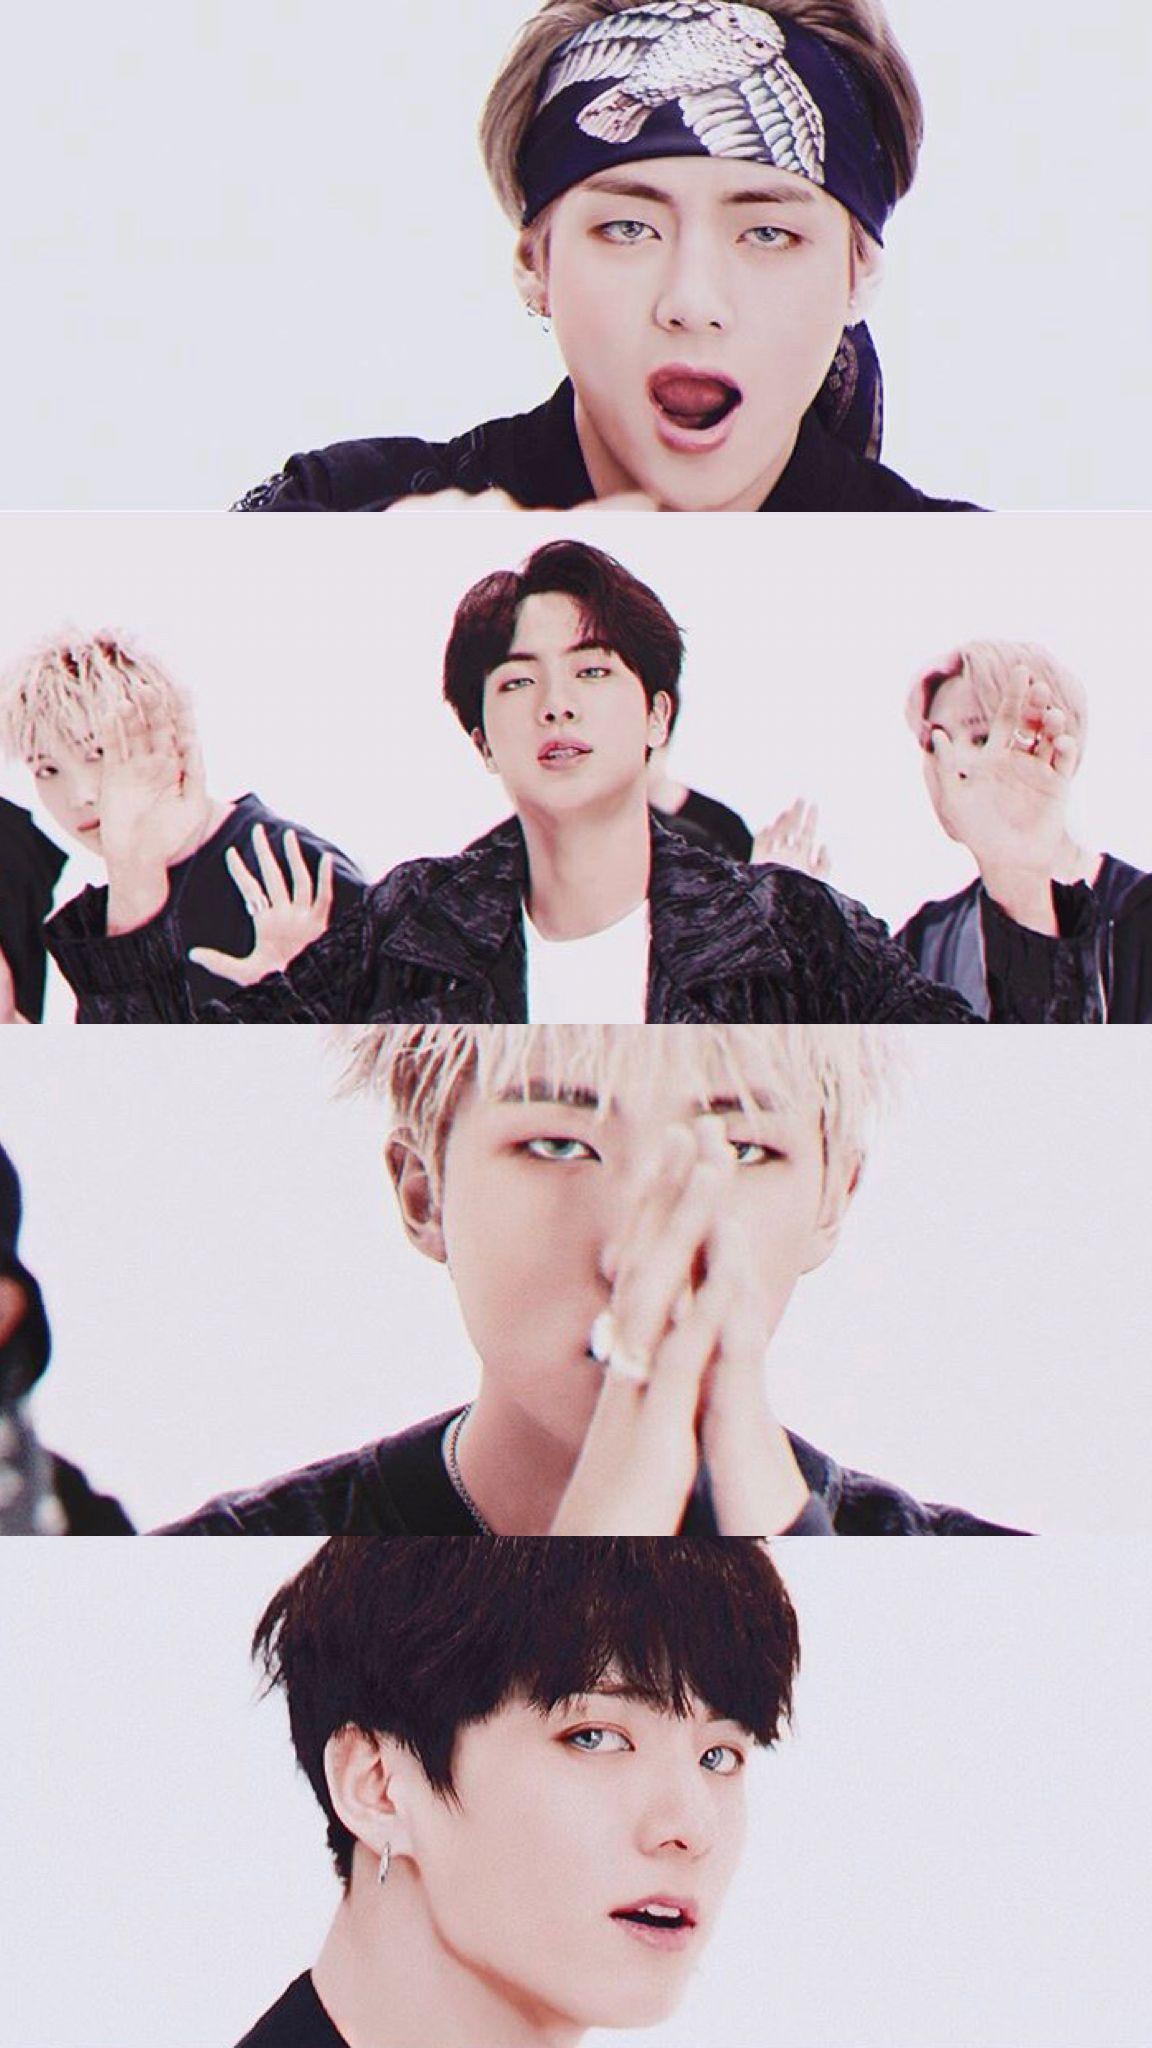 BTS 'Mic Drop' Wallpaper. Bts wallpaper, Bts